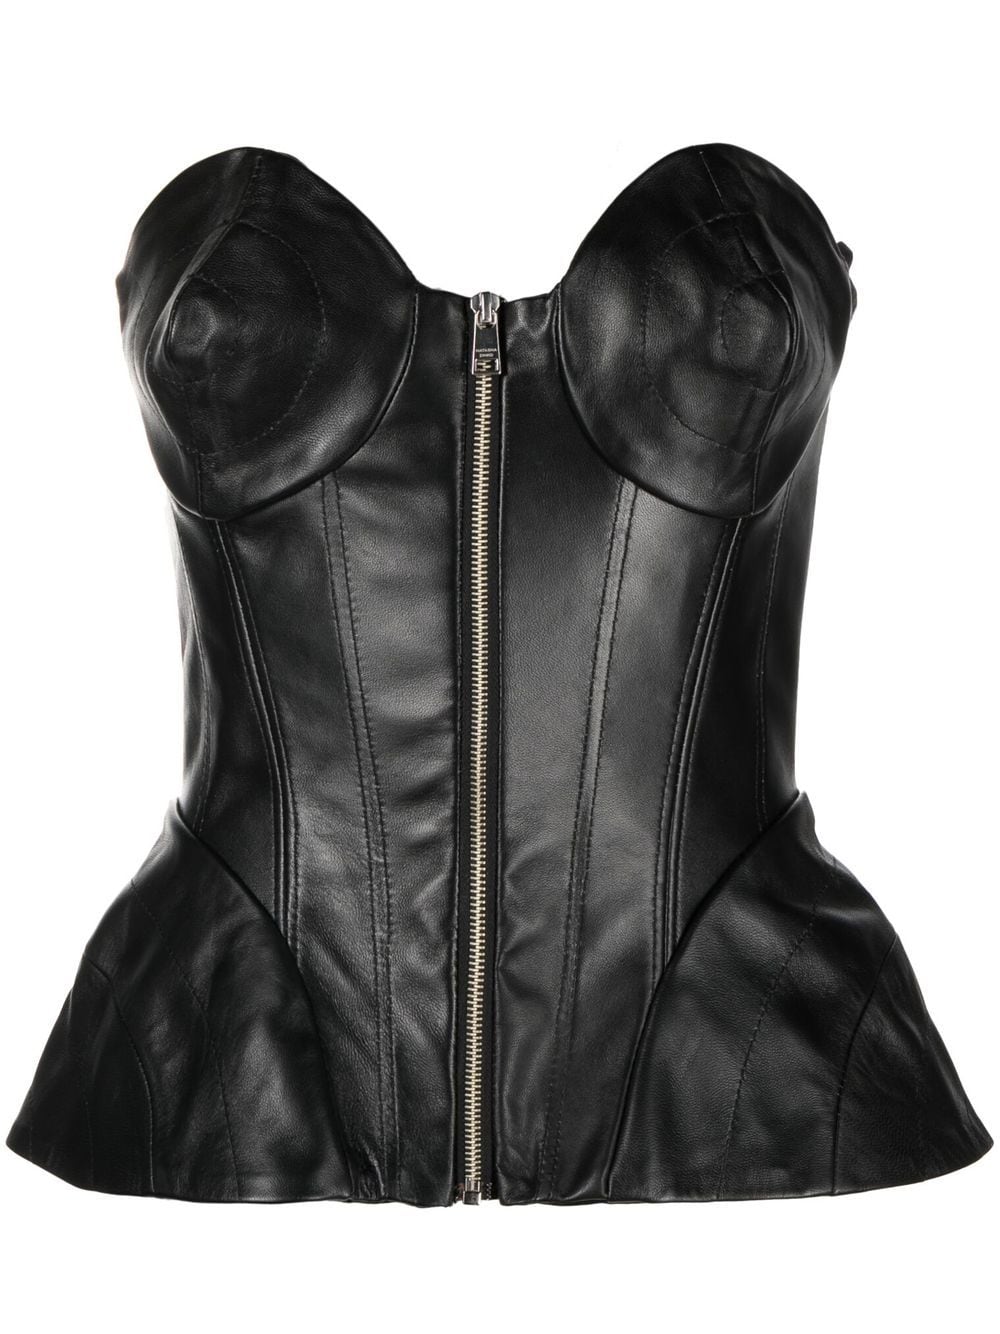 Natasha Zinko zip-front corset top - Black von Natasha Zinko